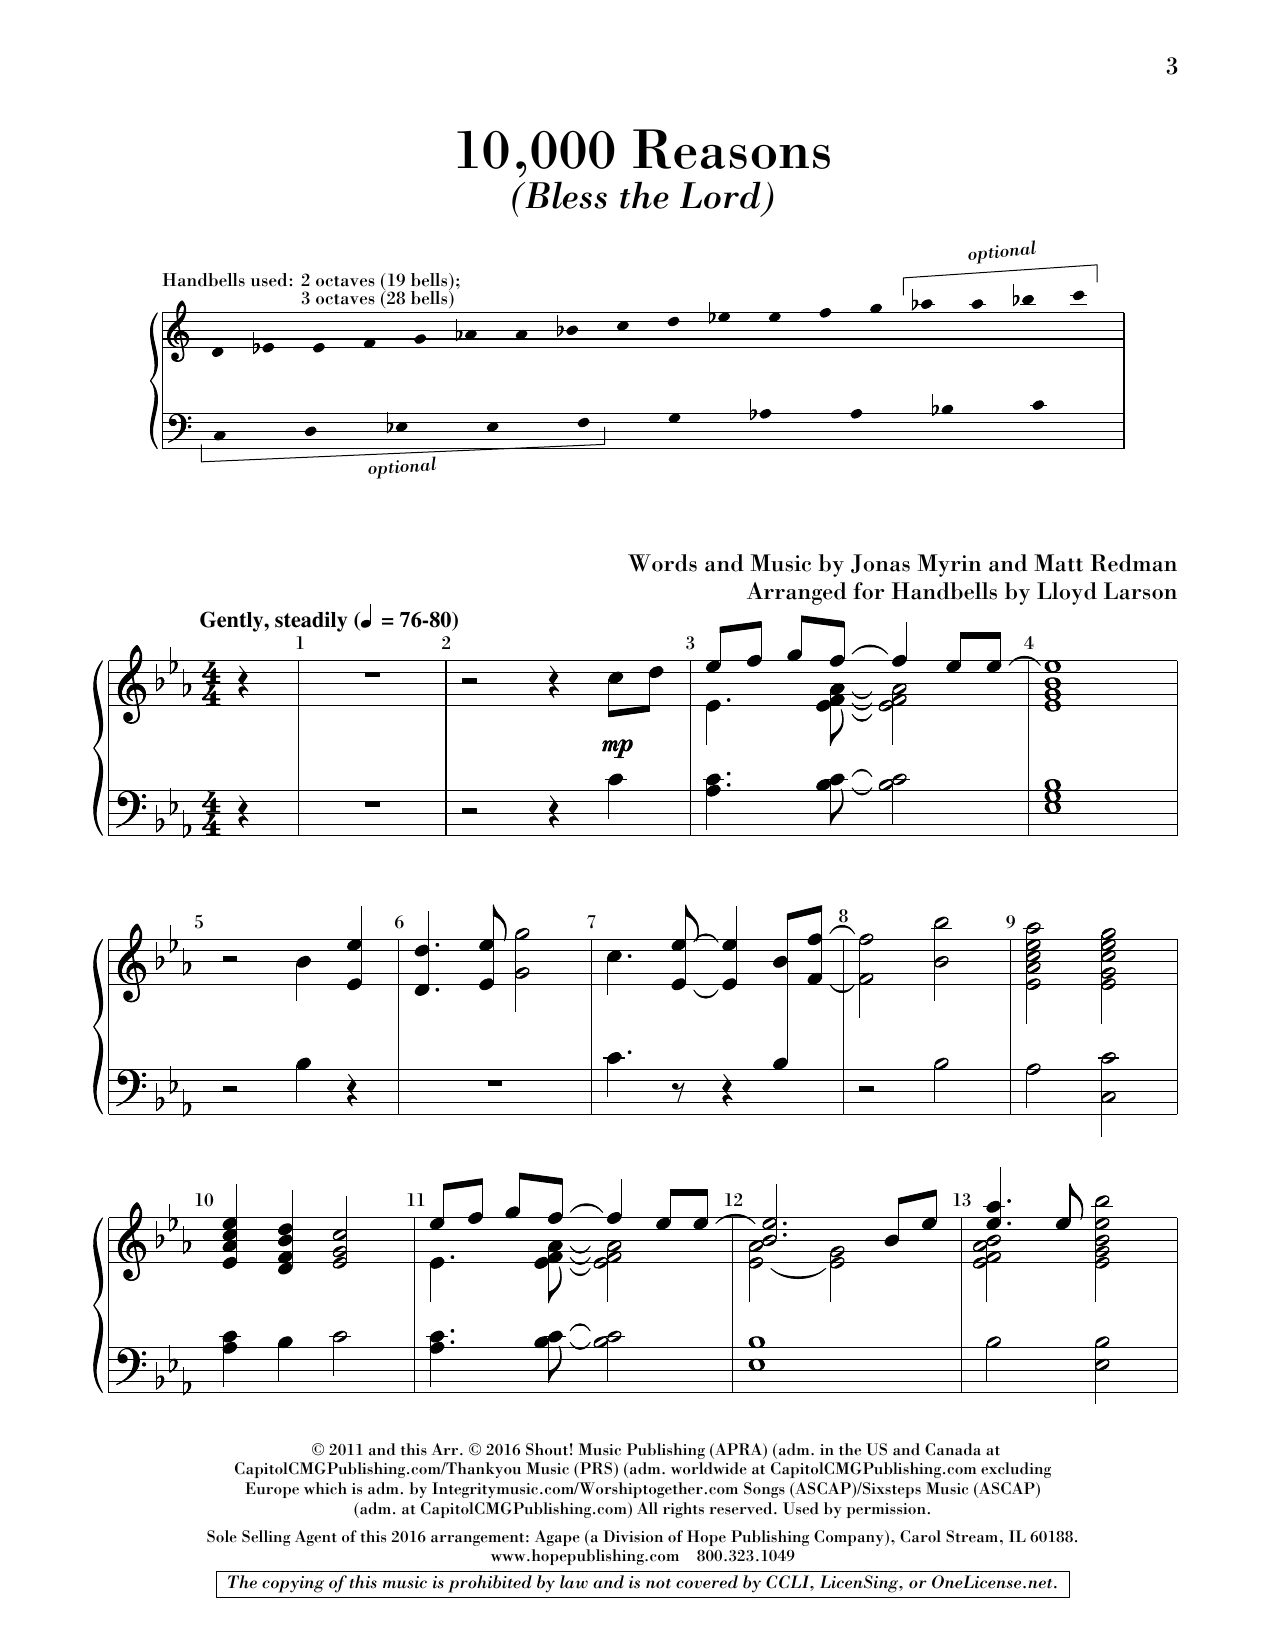 Lloyd Larson 10,000 Reasons (Bless the Lord) - Handbells Sheet Music Notes & Chords for Choir Instrumental Pak - Download or Print PDF